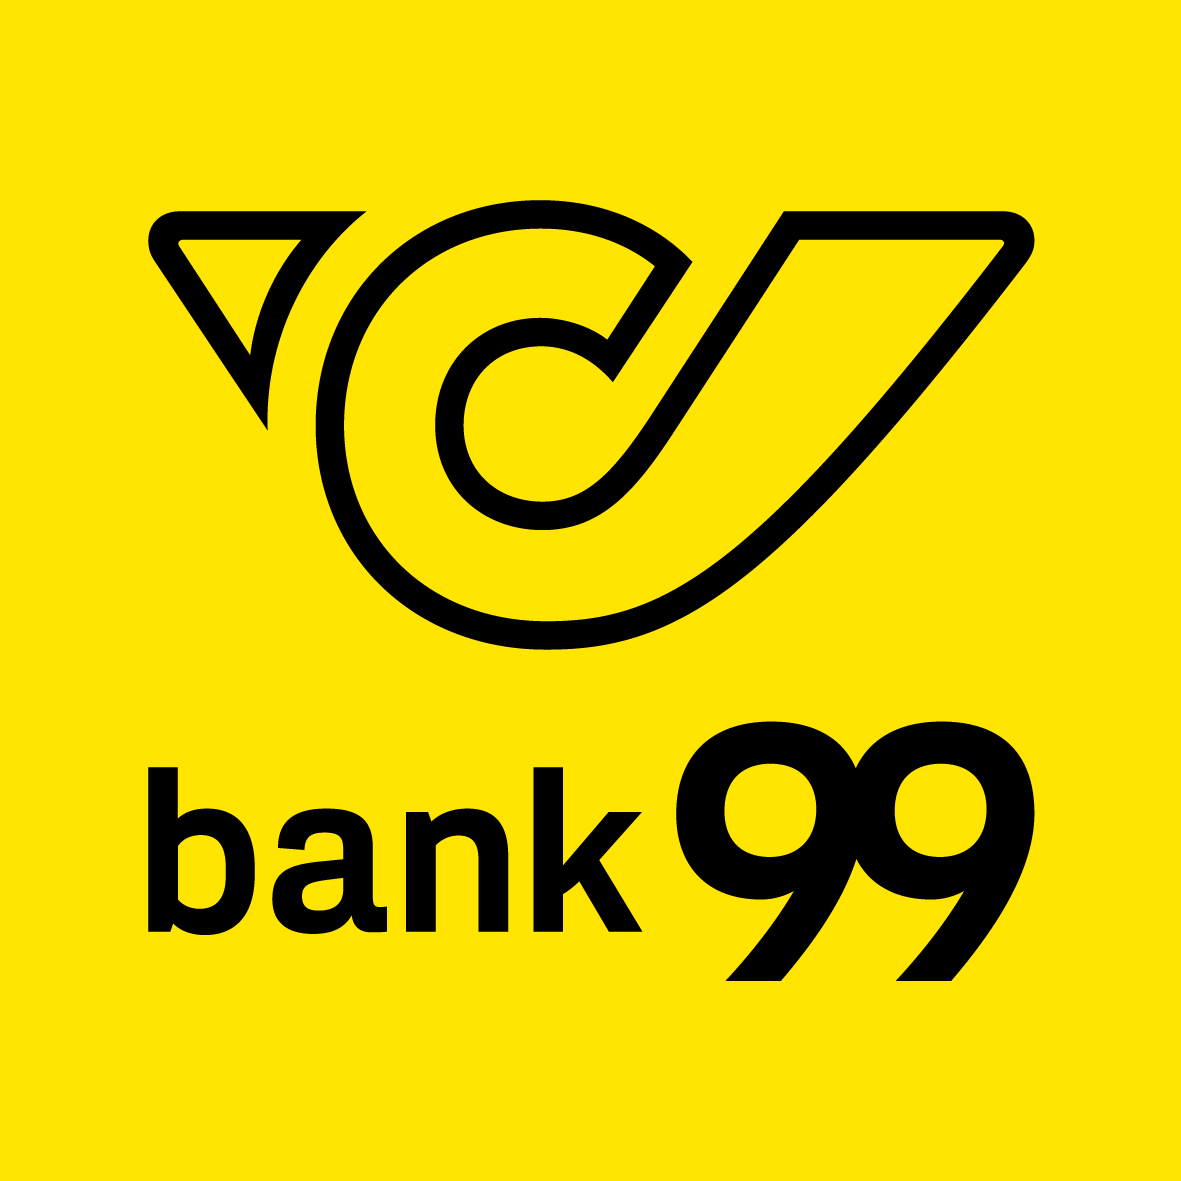 Logo_Post_bank99_PP CMYK RZ (1)